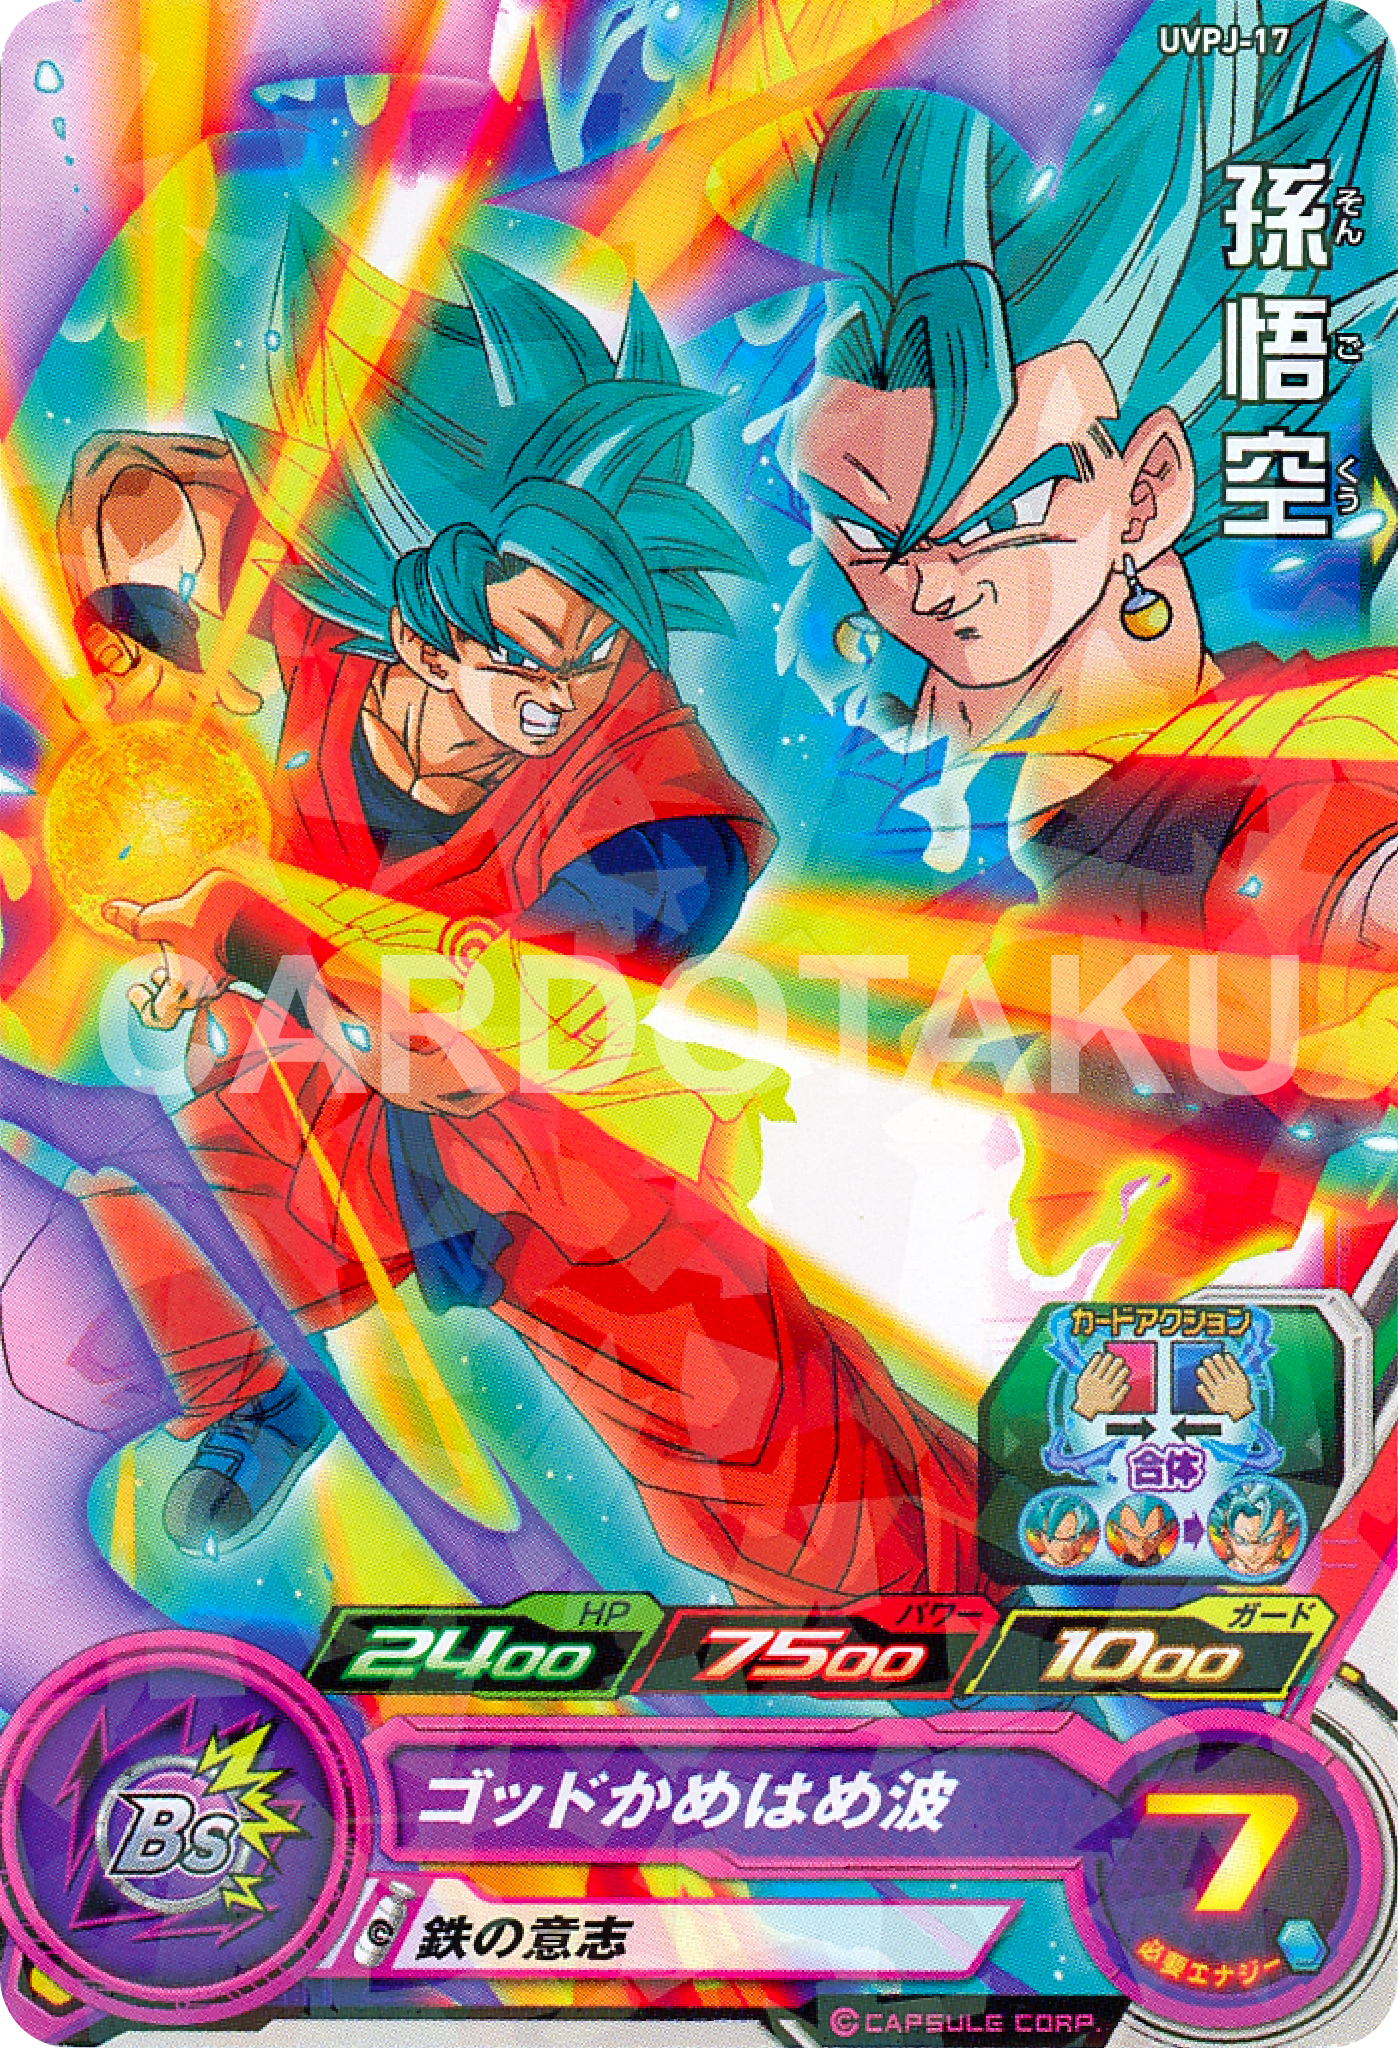 SUPER DRAGON BALL HEROES UVPJ-17 Son Goku